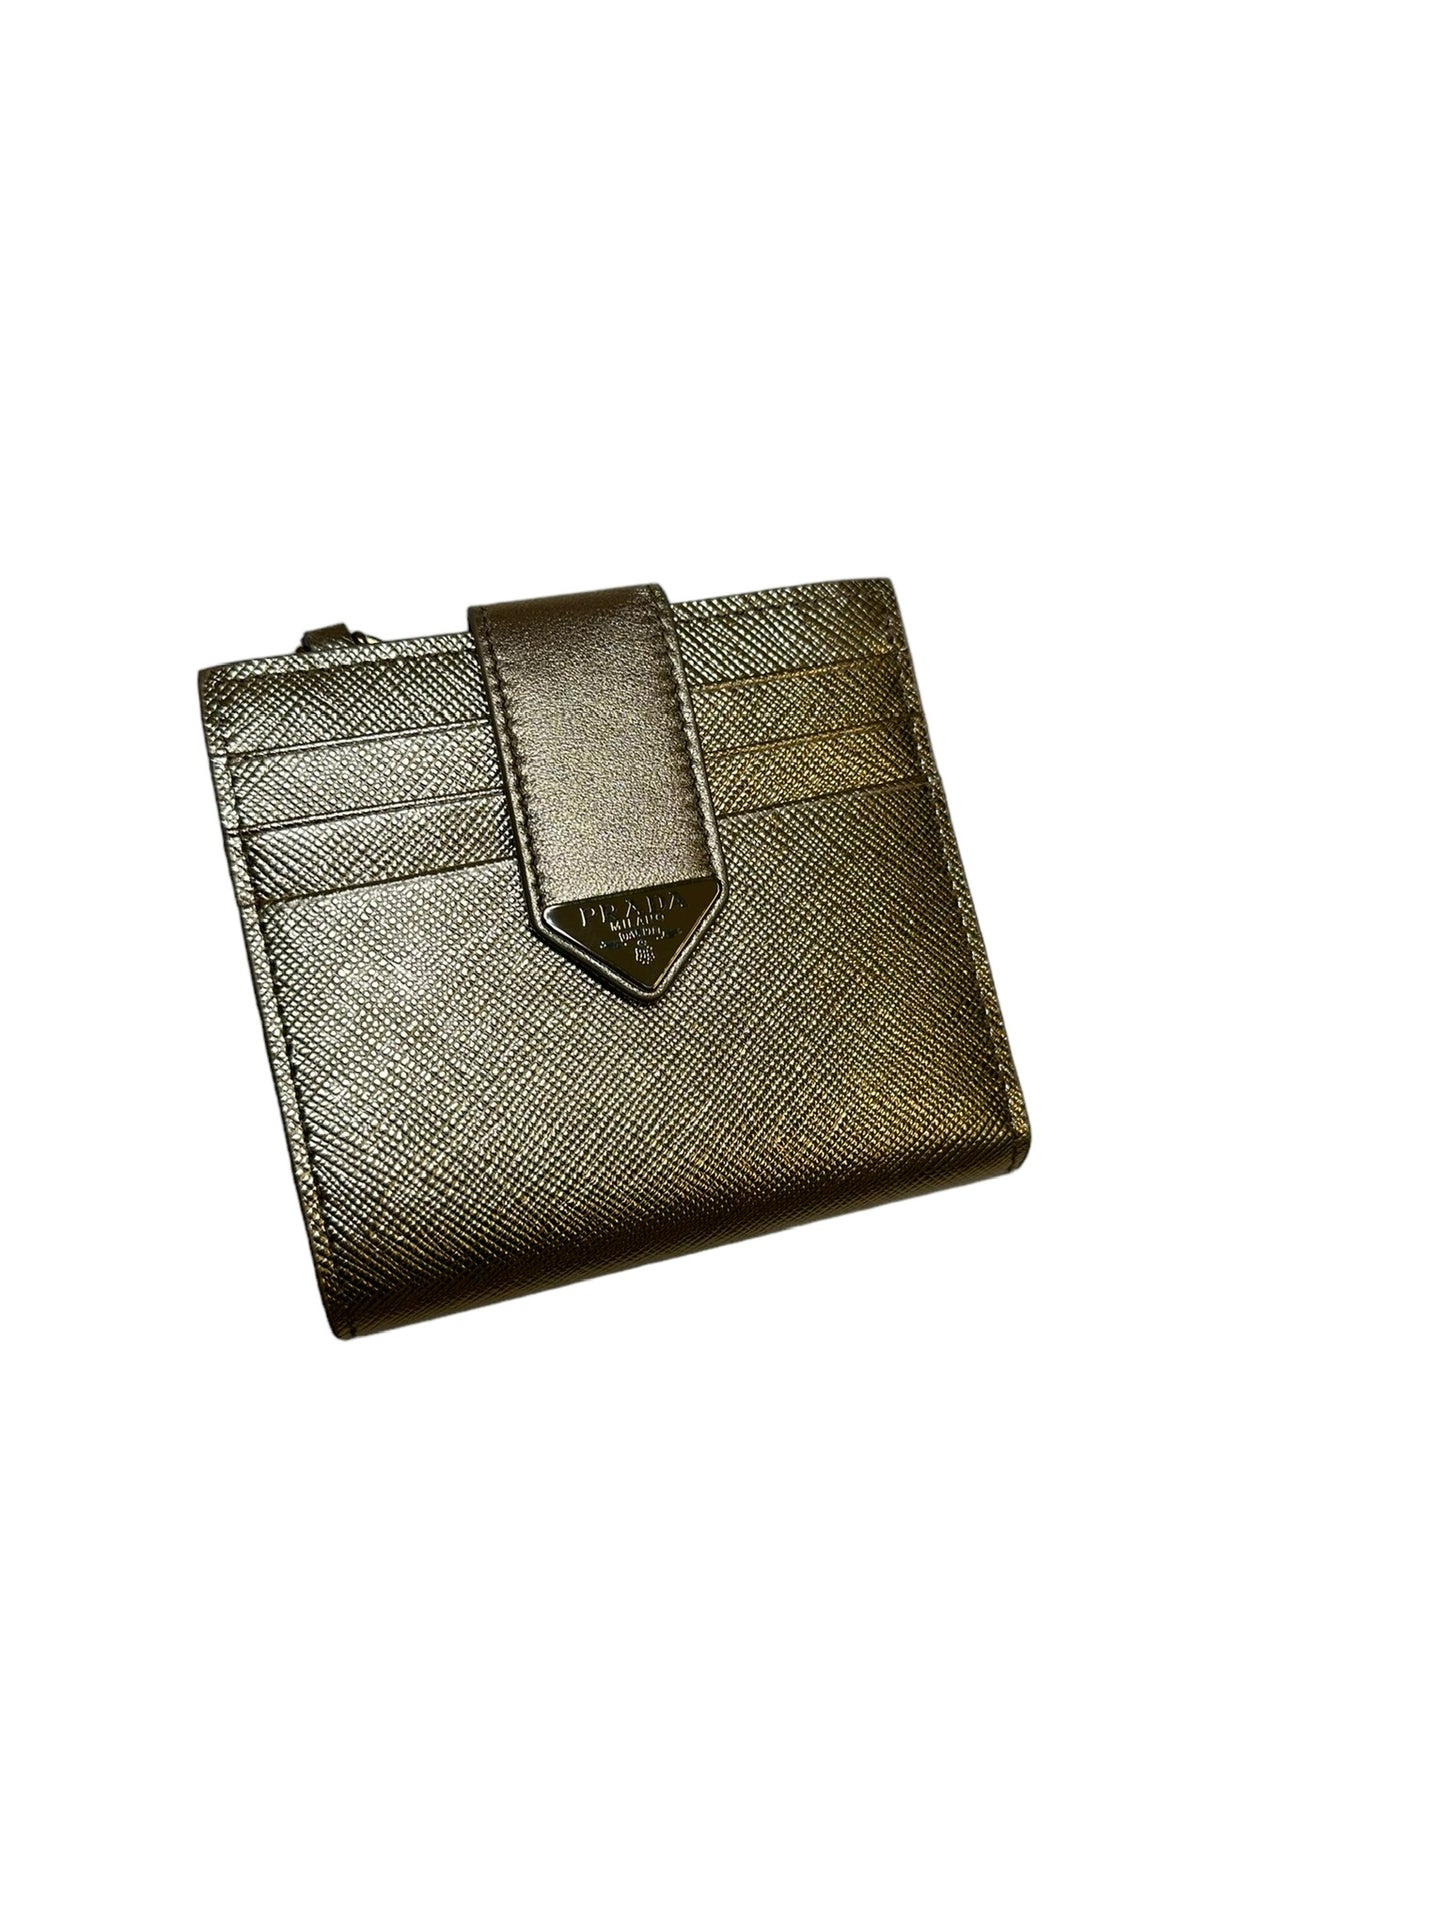 PRADA - Platinum Saffiano Small Wallet